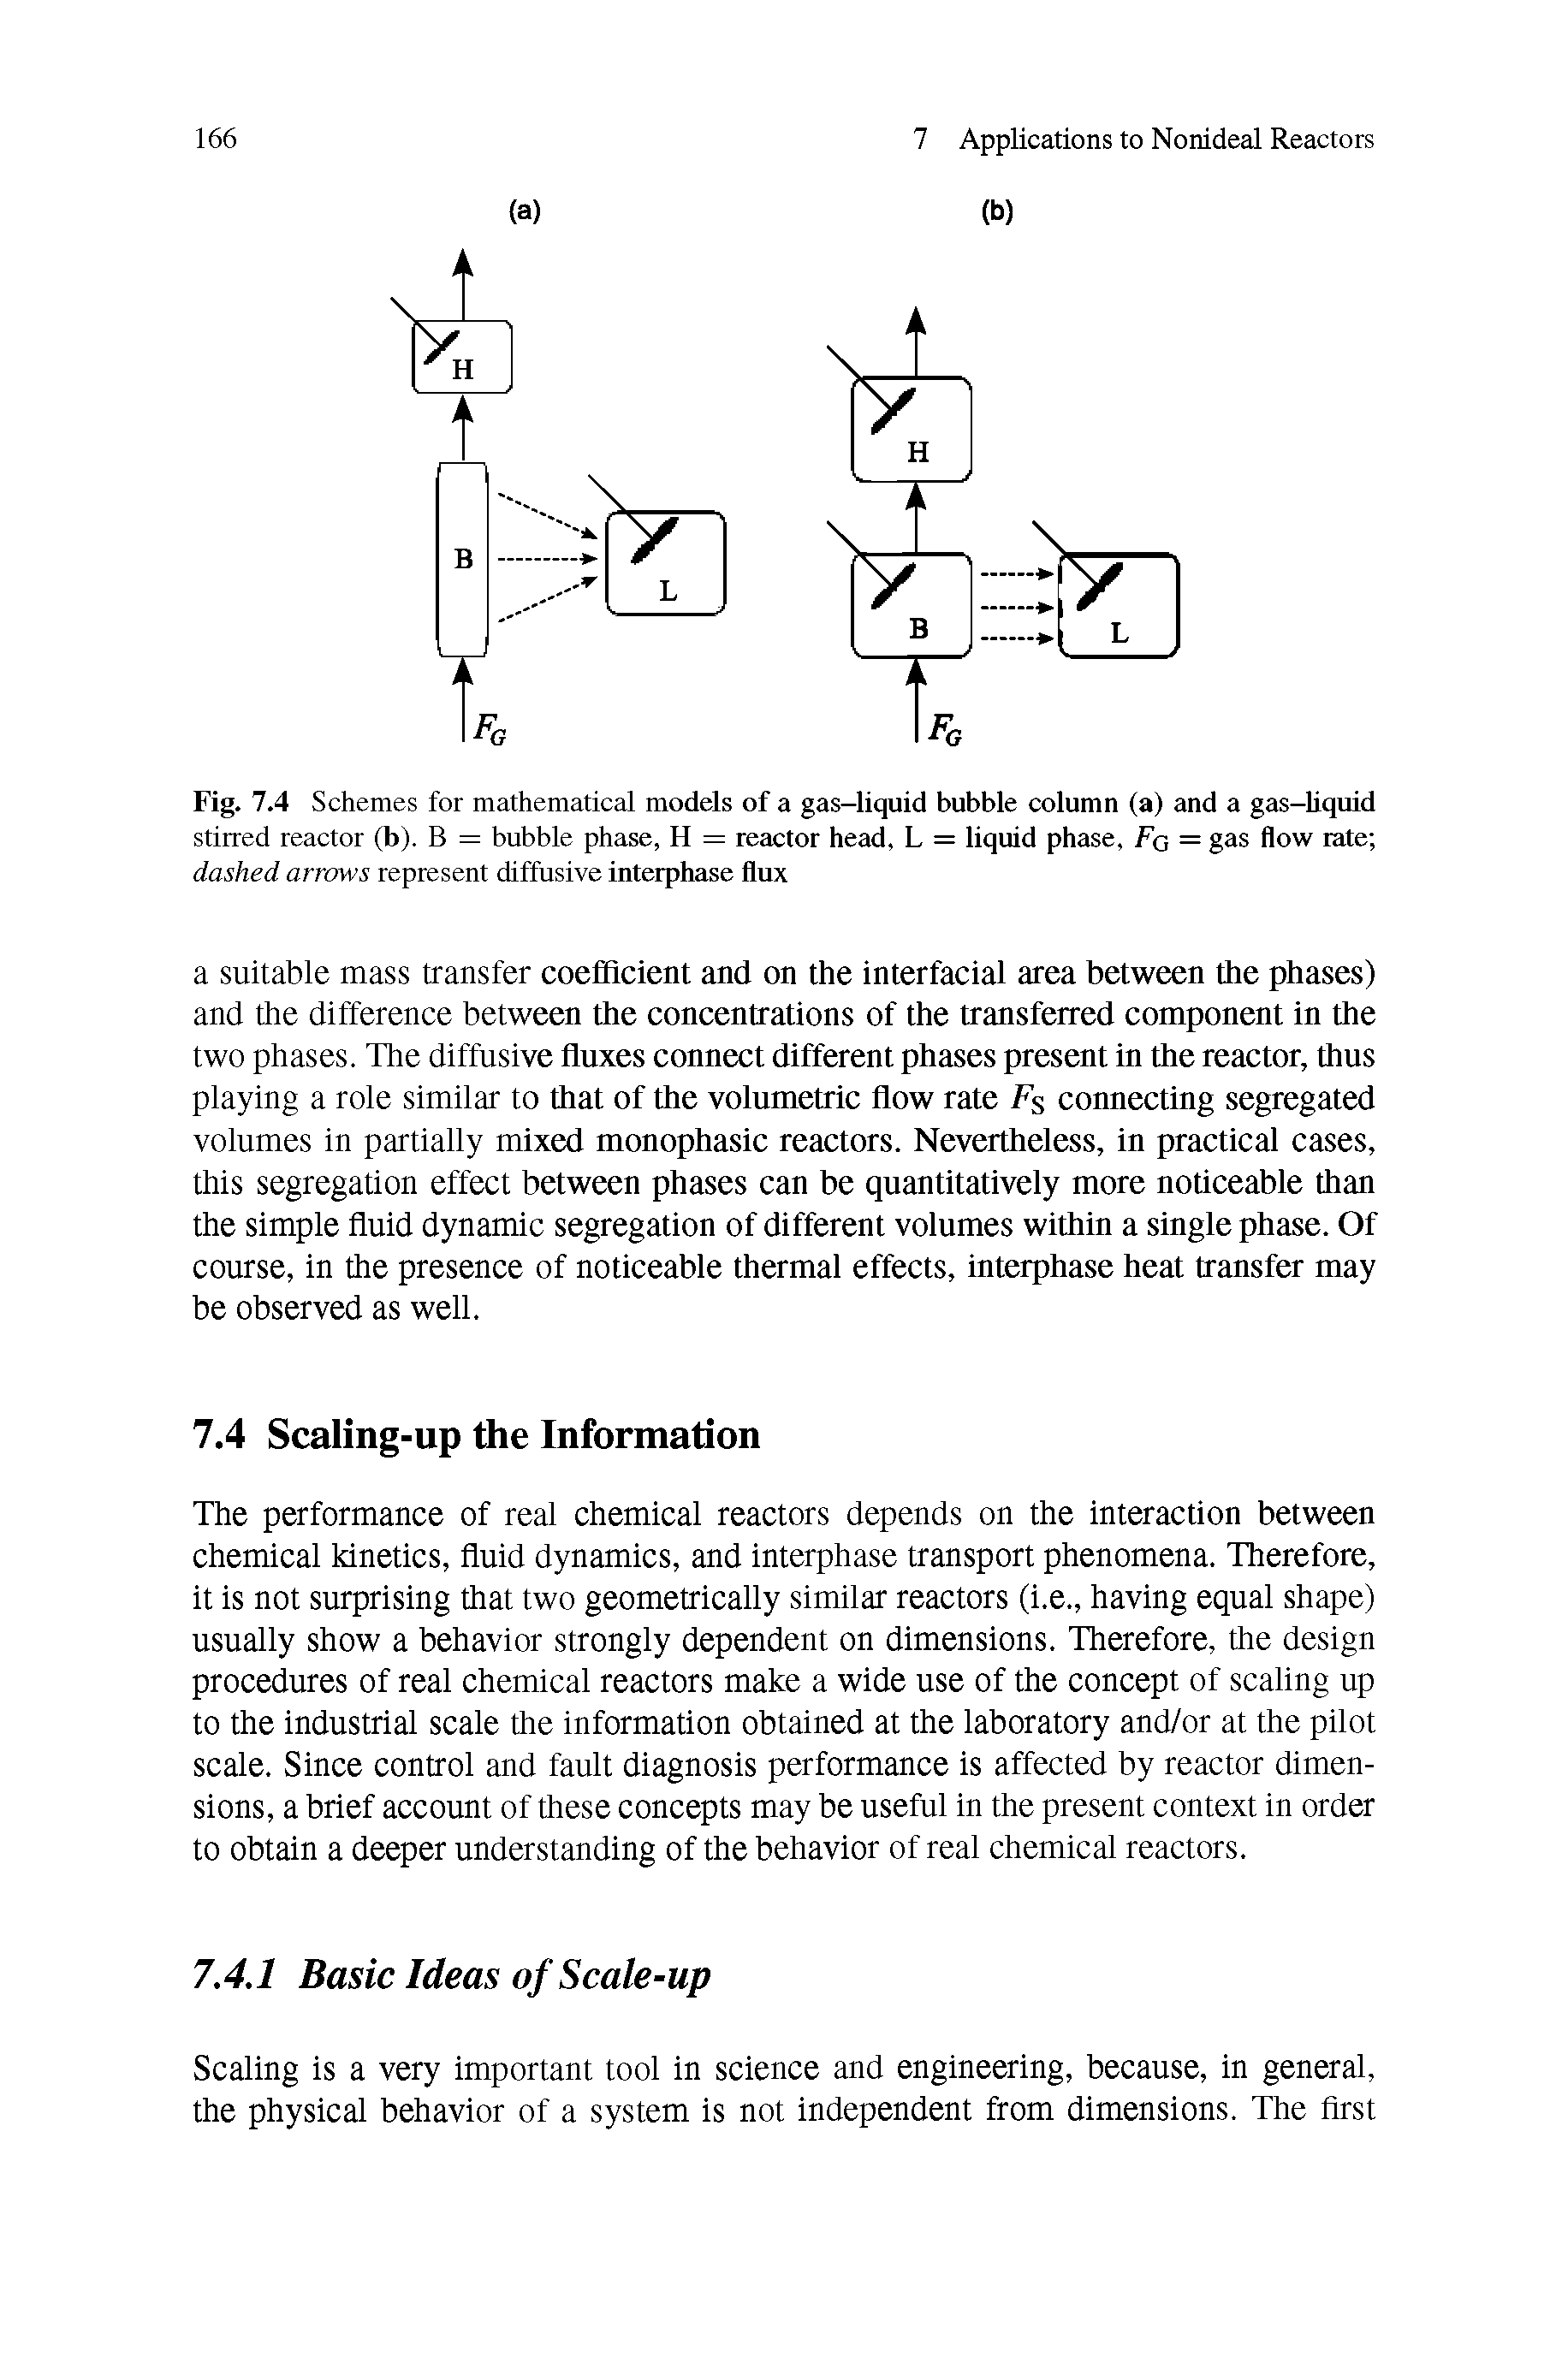 Fig. 7.4 Schemes for mathematical models of a gas-liquid bubble column (a) and a gas-liquid stirred reactor (b). B = bubble phase, H = reactor head, L = liquid phase, Fg = gas flow rate ...